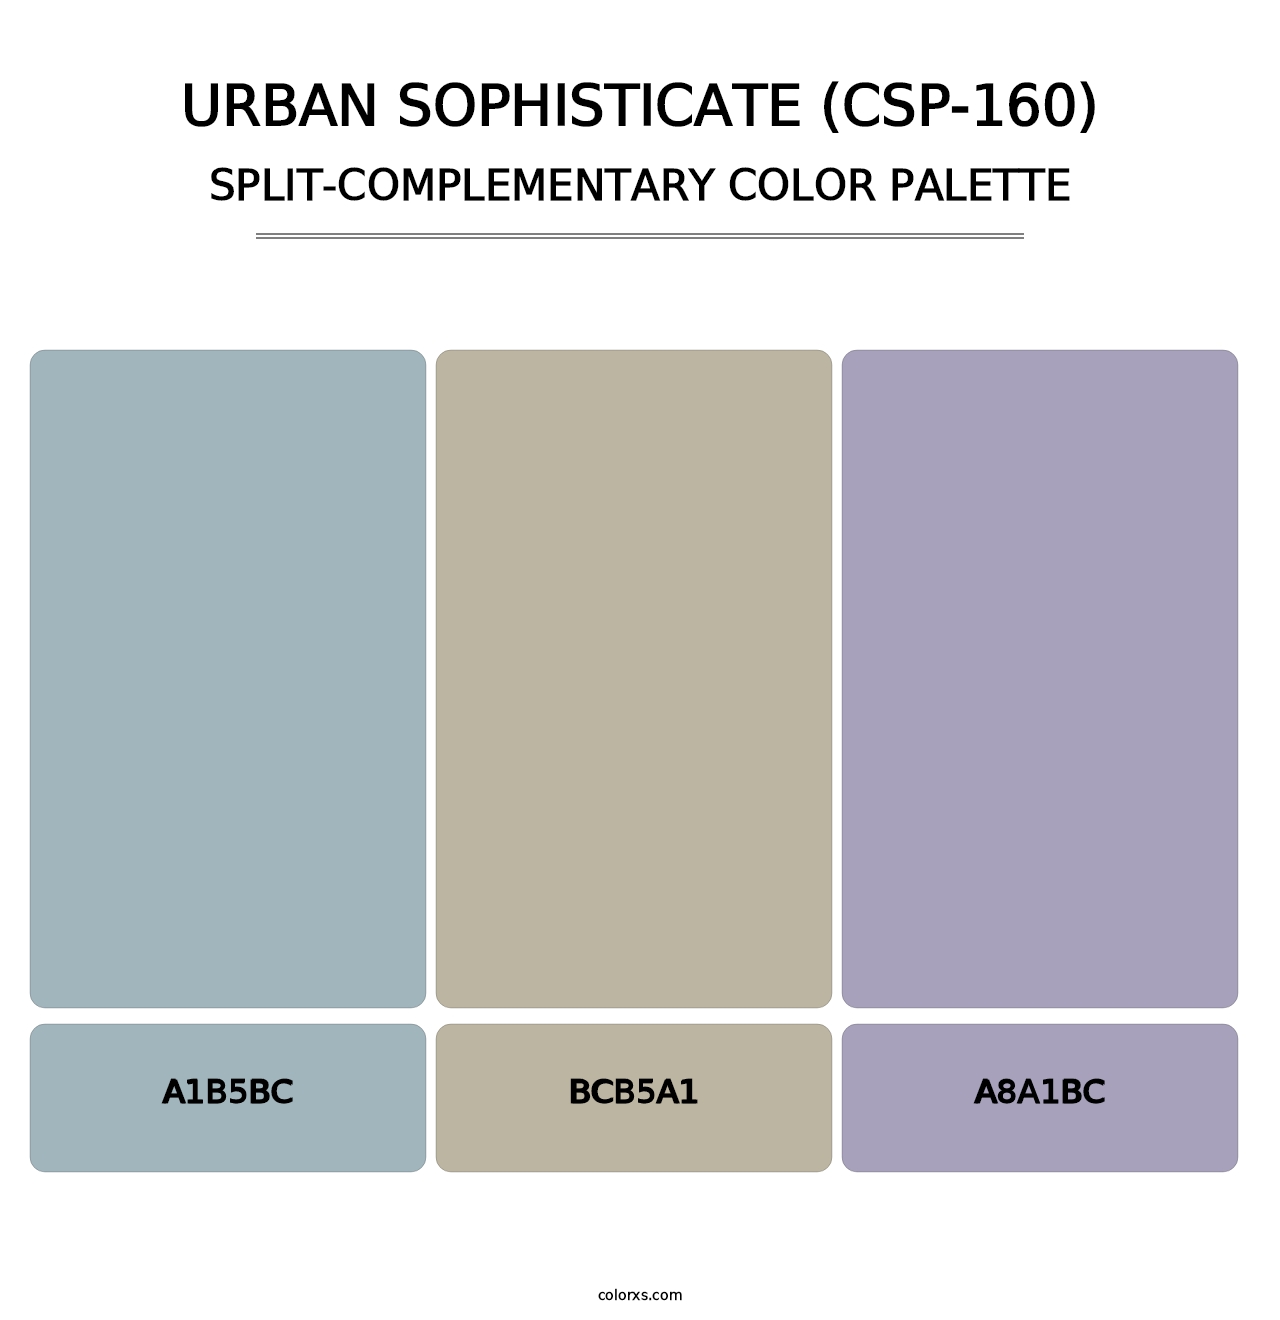 Urban Sophisticate (CSP-160) - Split-Complementary Color Palette